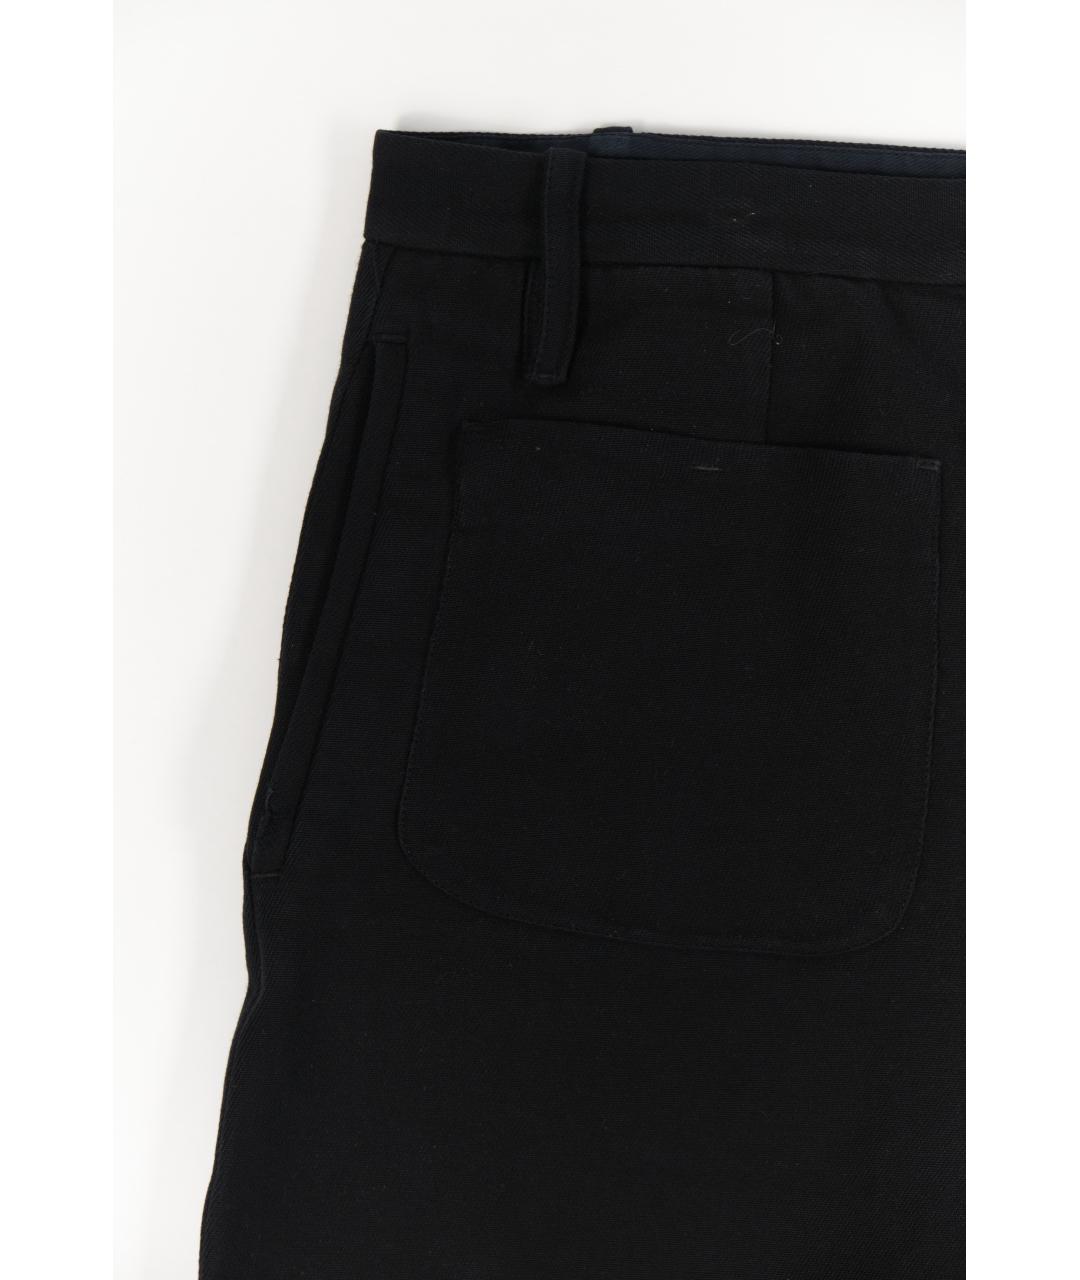 LOST & FOUND RIA DUNN Черные хлопковые брюки чинос, фото 5